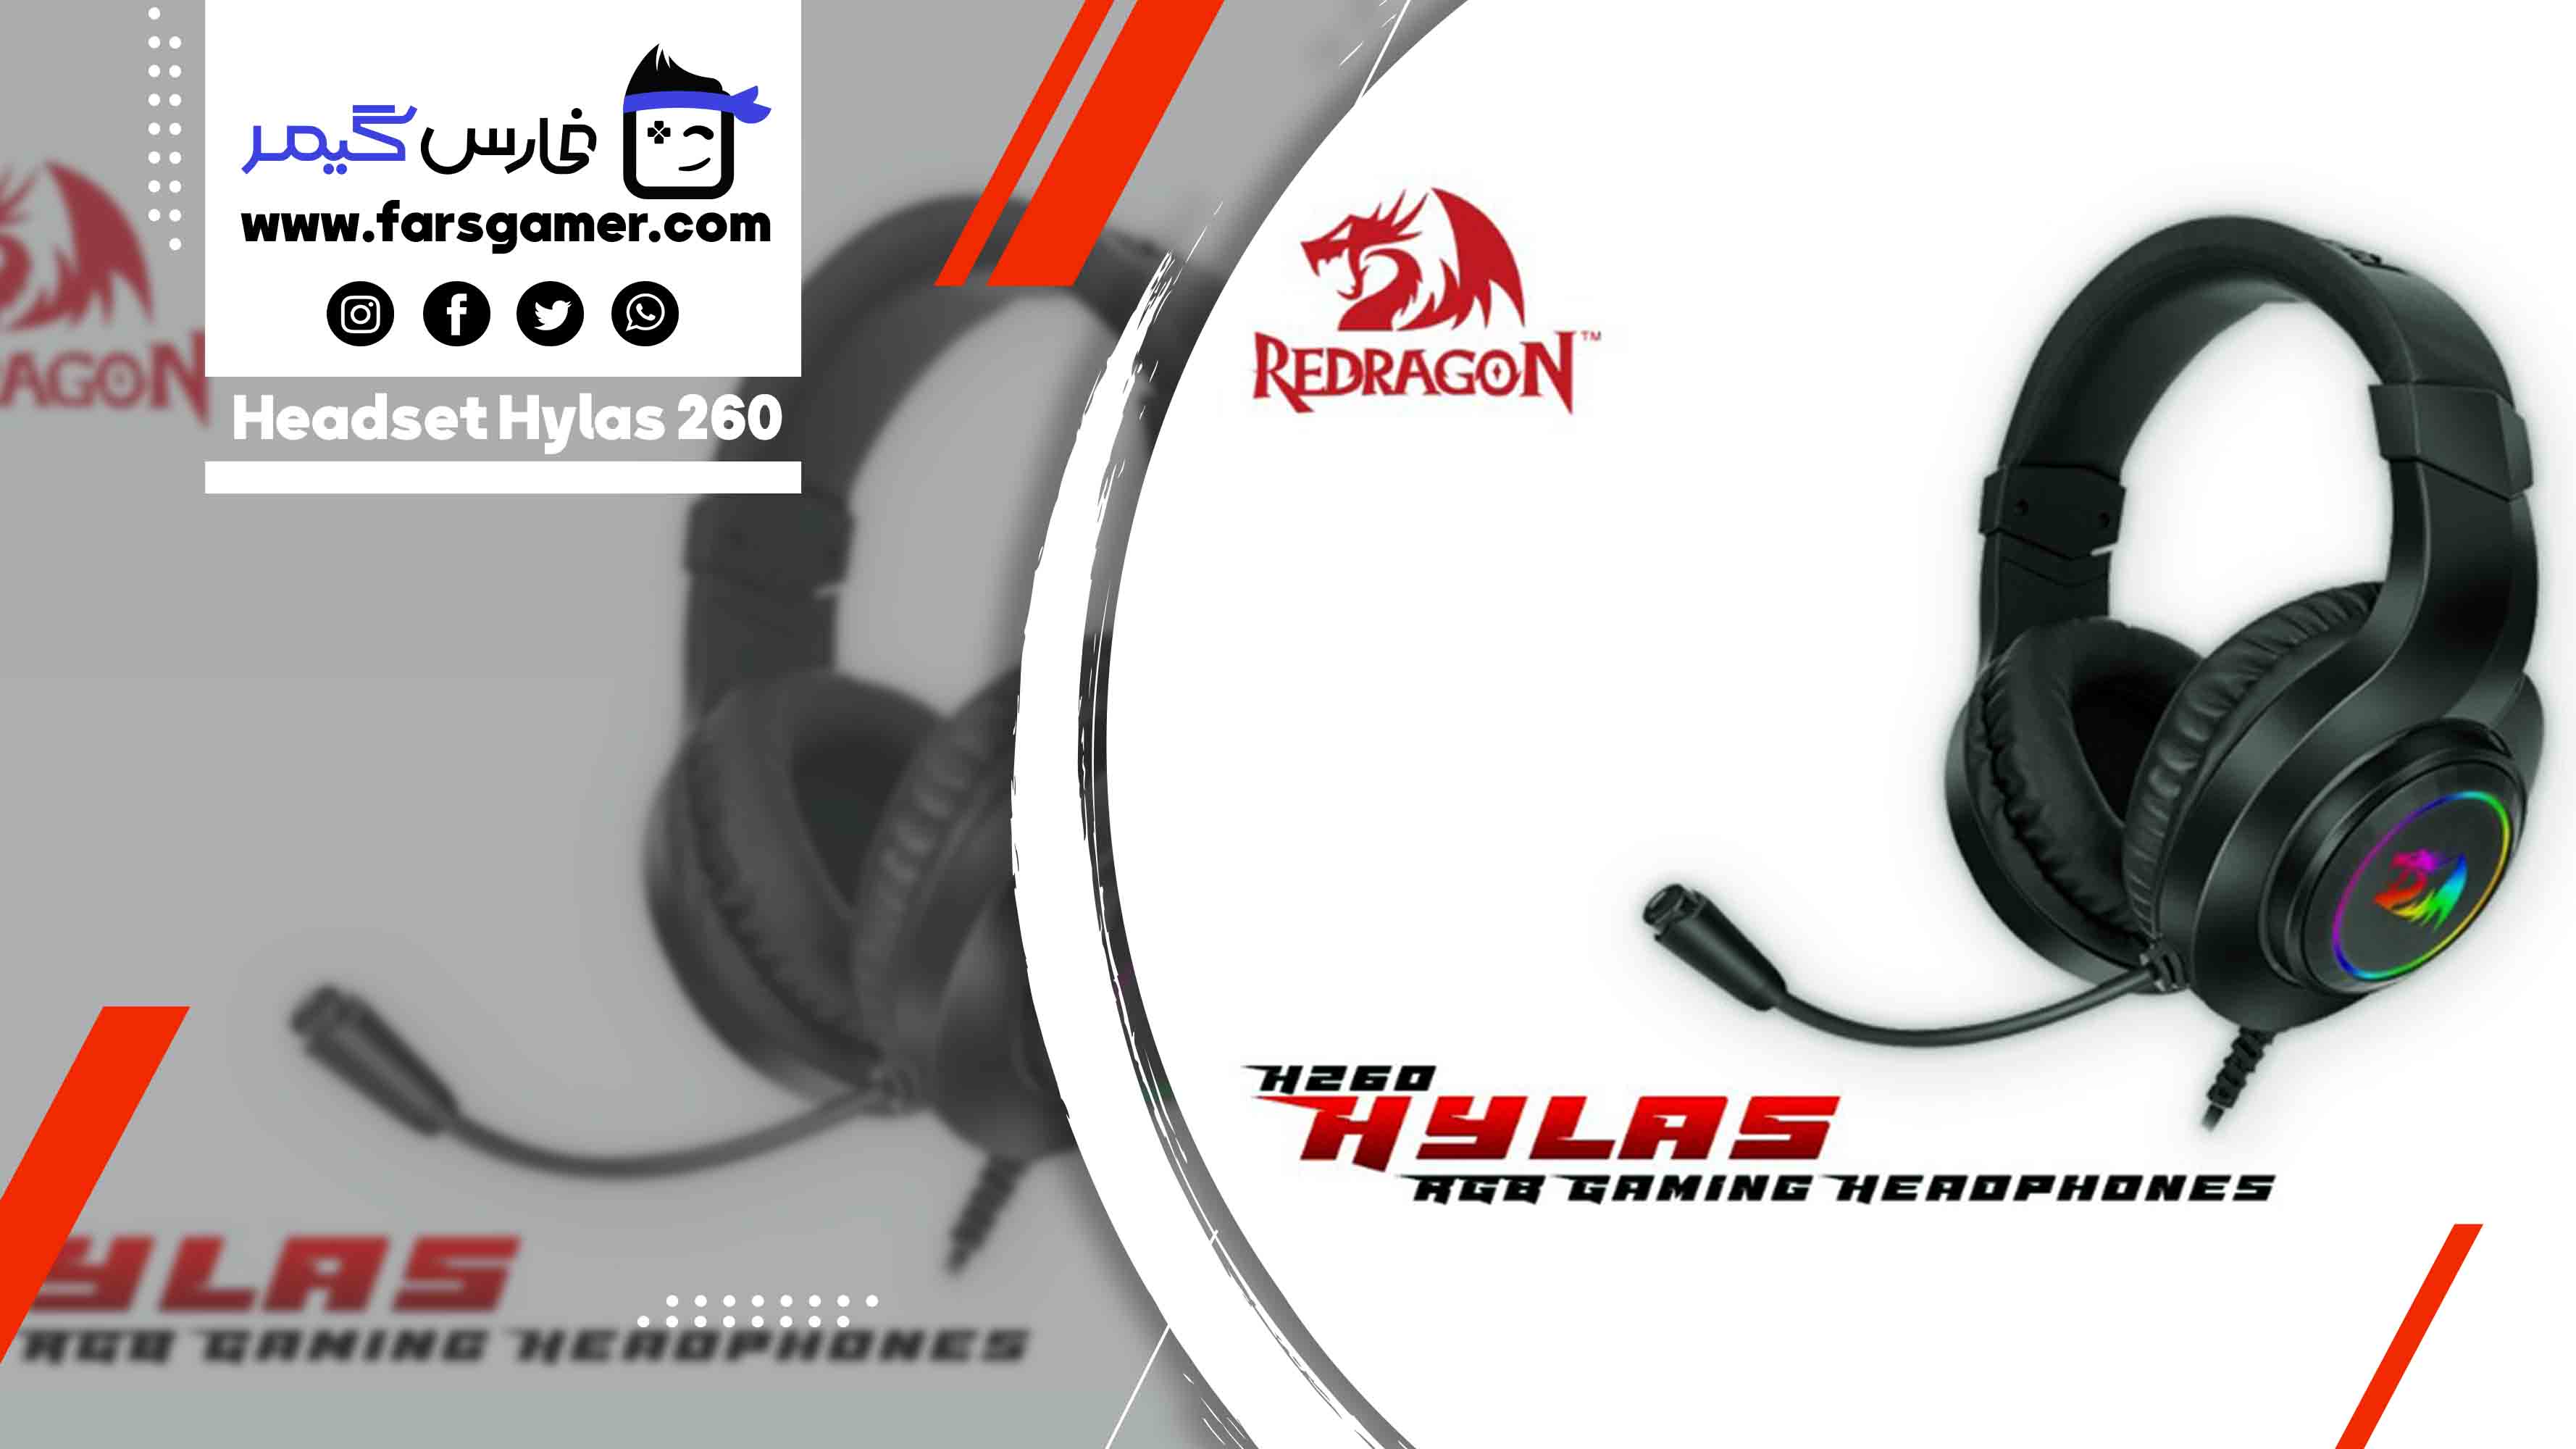 Headset Hylas 260